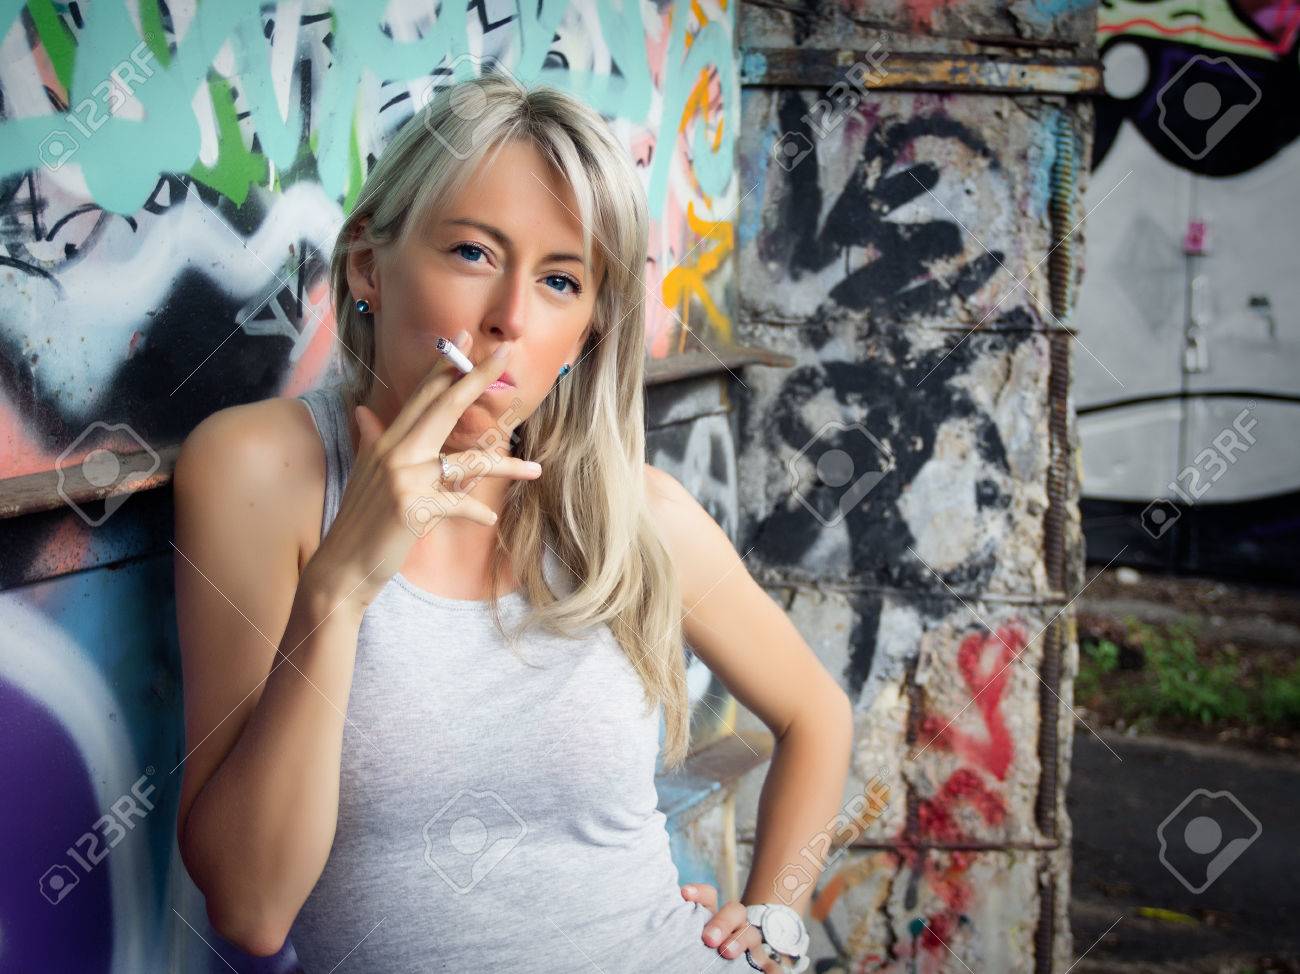 Young teen girl smoking